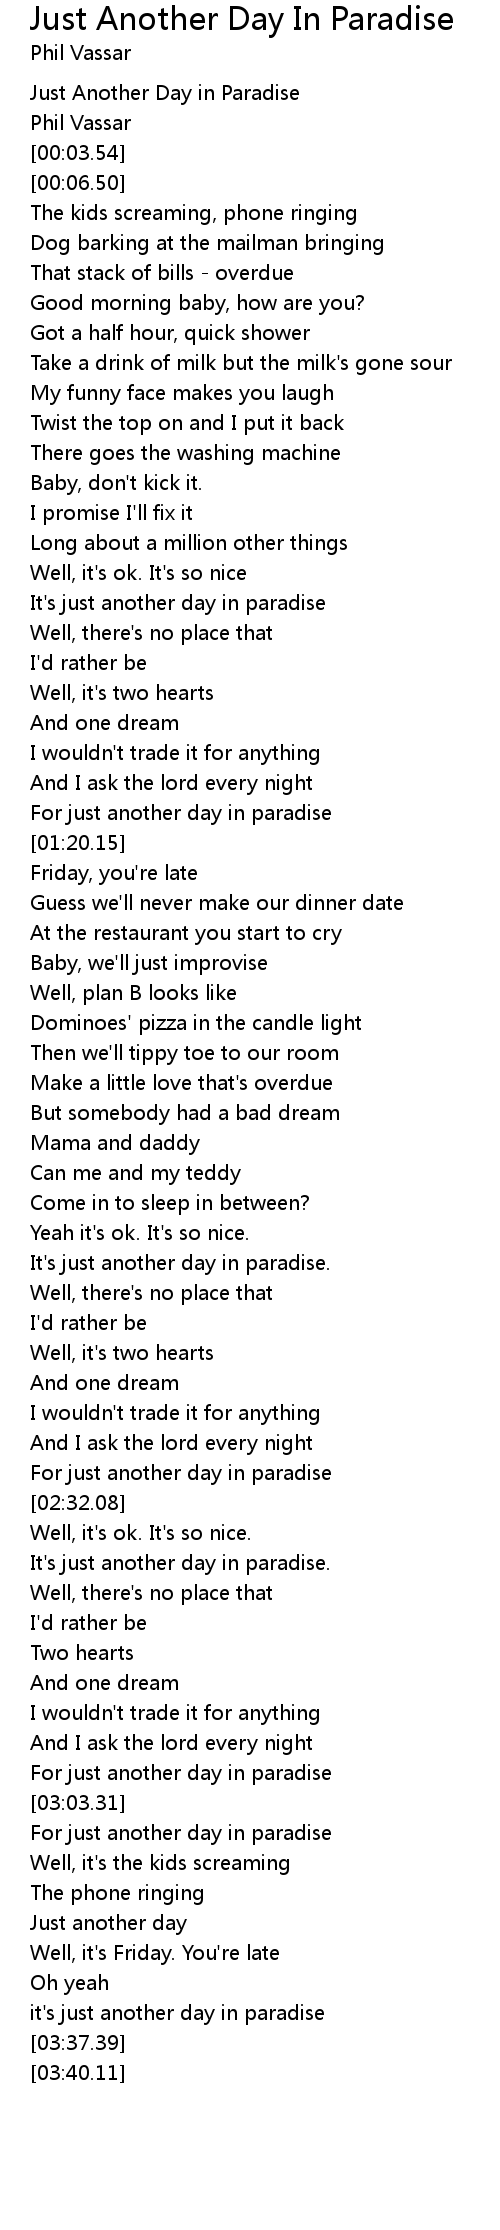 Phil Vassar - Just Another Day in Paradise (Lyrics) 